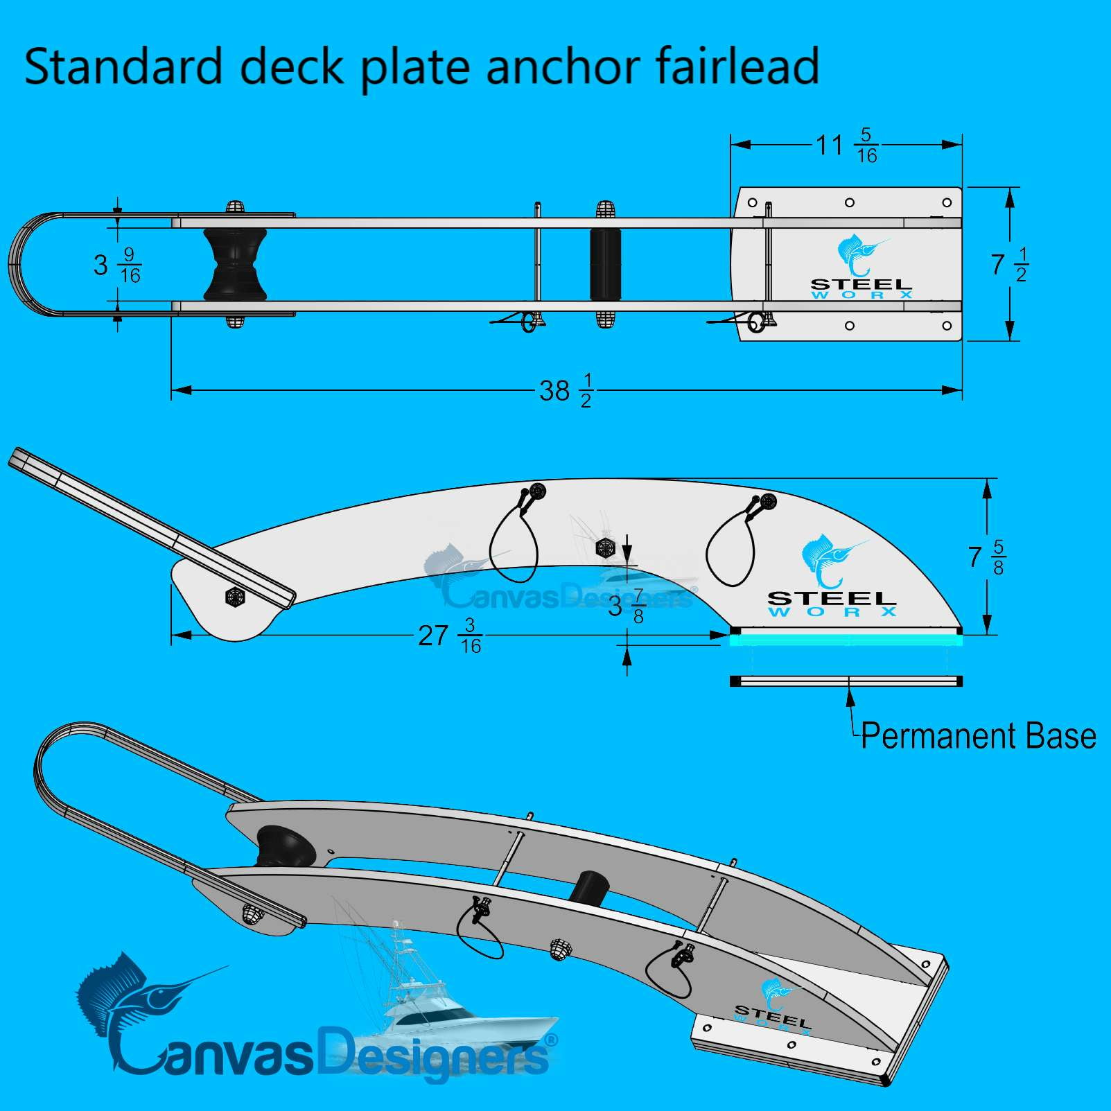 Viking sportfish Standard stainless deck Plate Anchor Fairlead